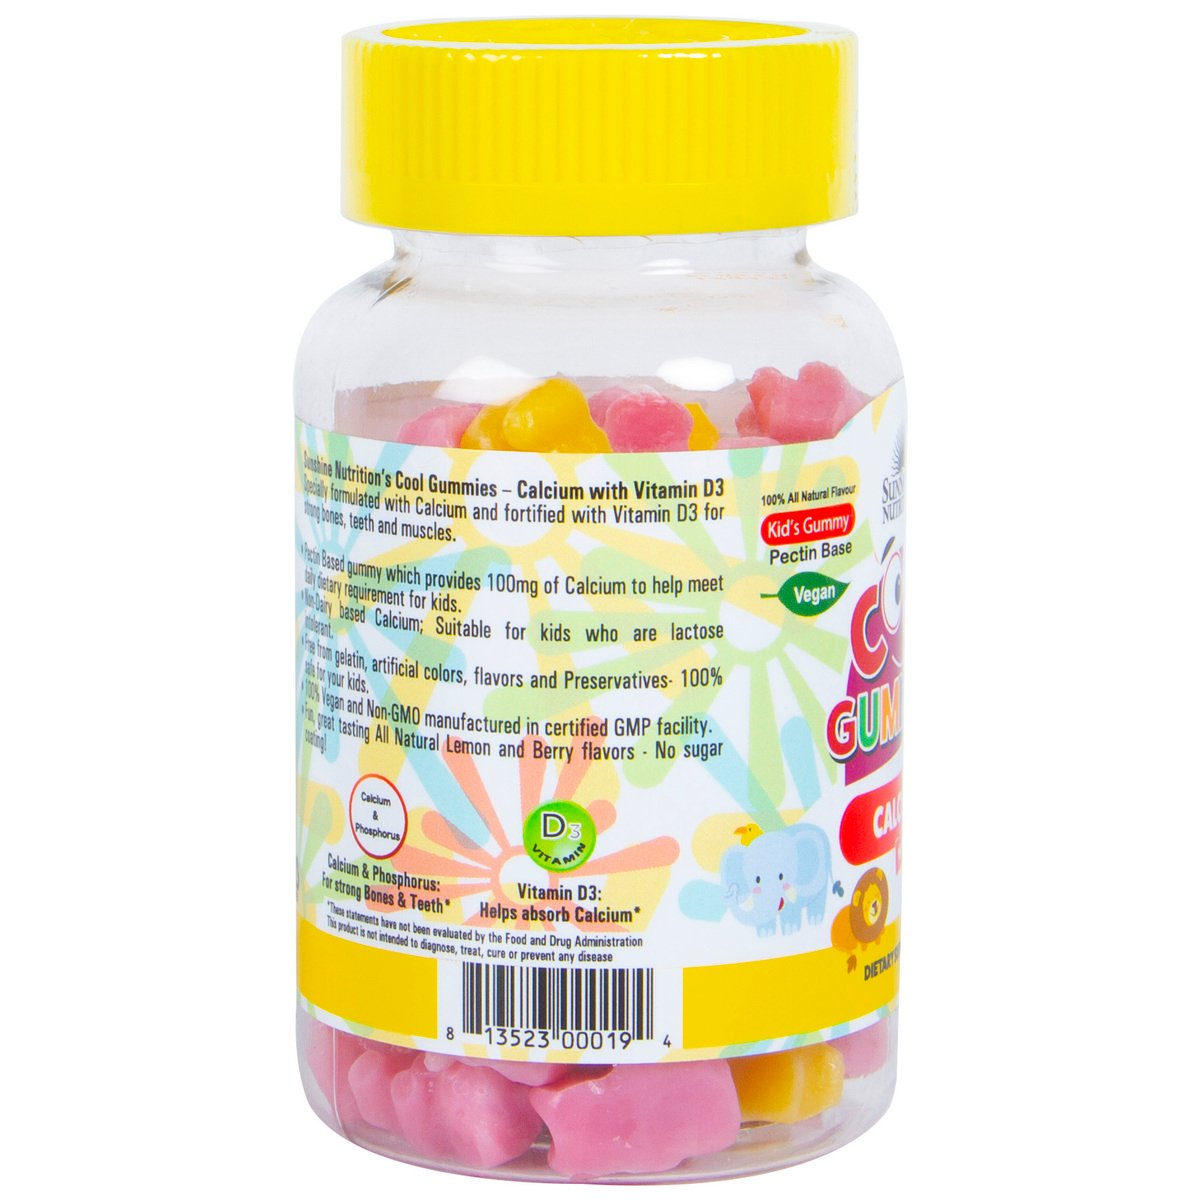 Sunshine Nutrition Cool Gummies Calcium With Vitamin D3 60 pcs